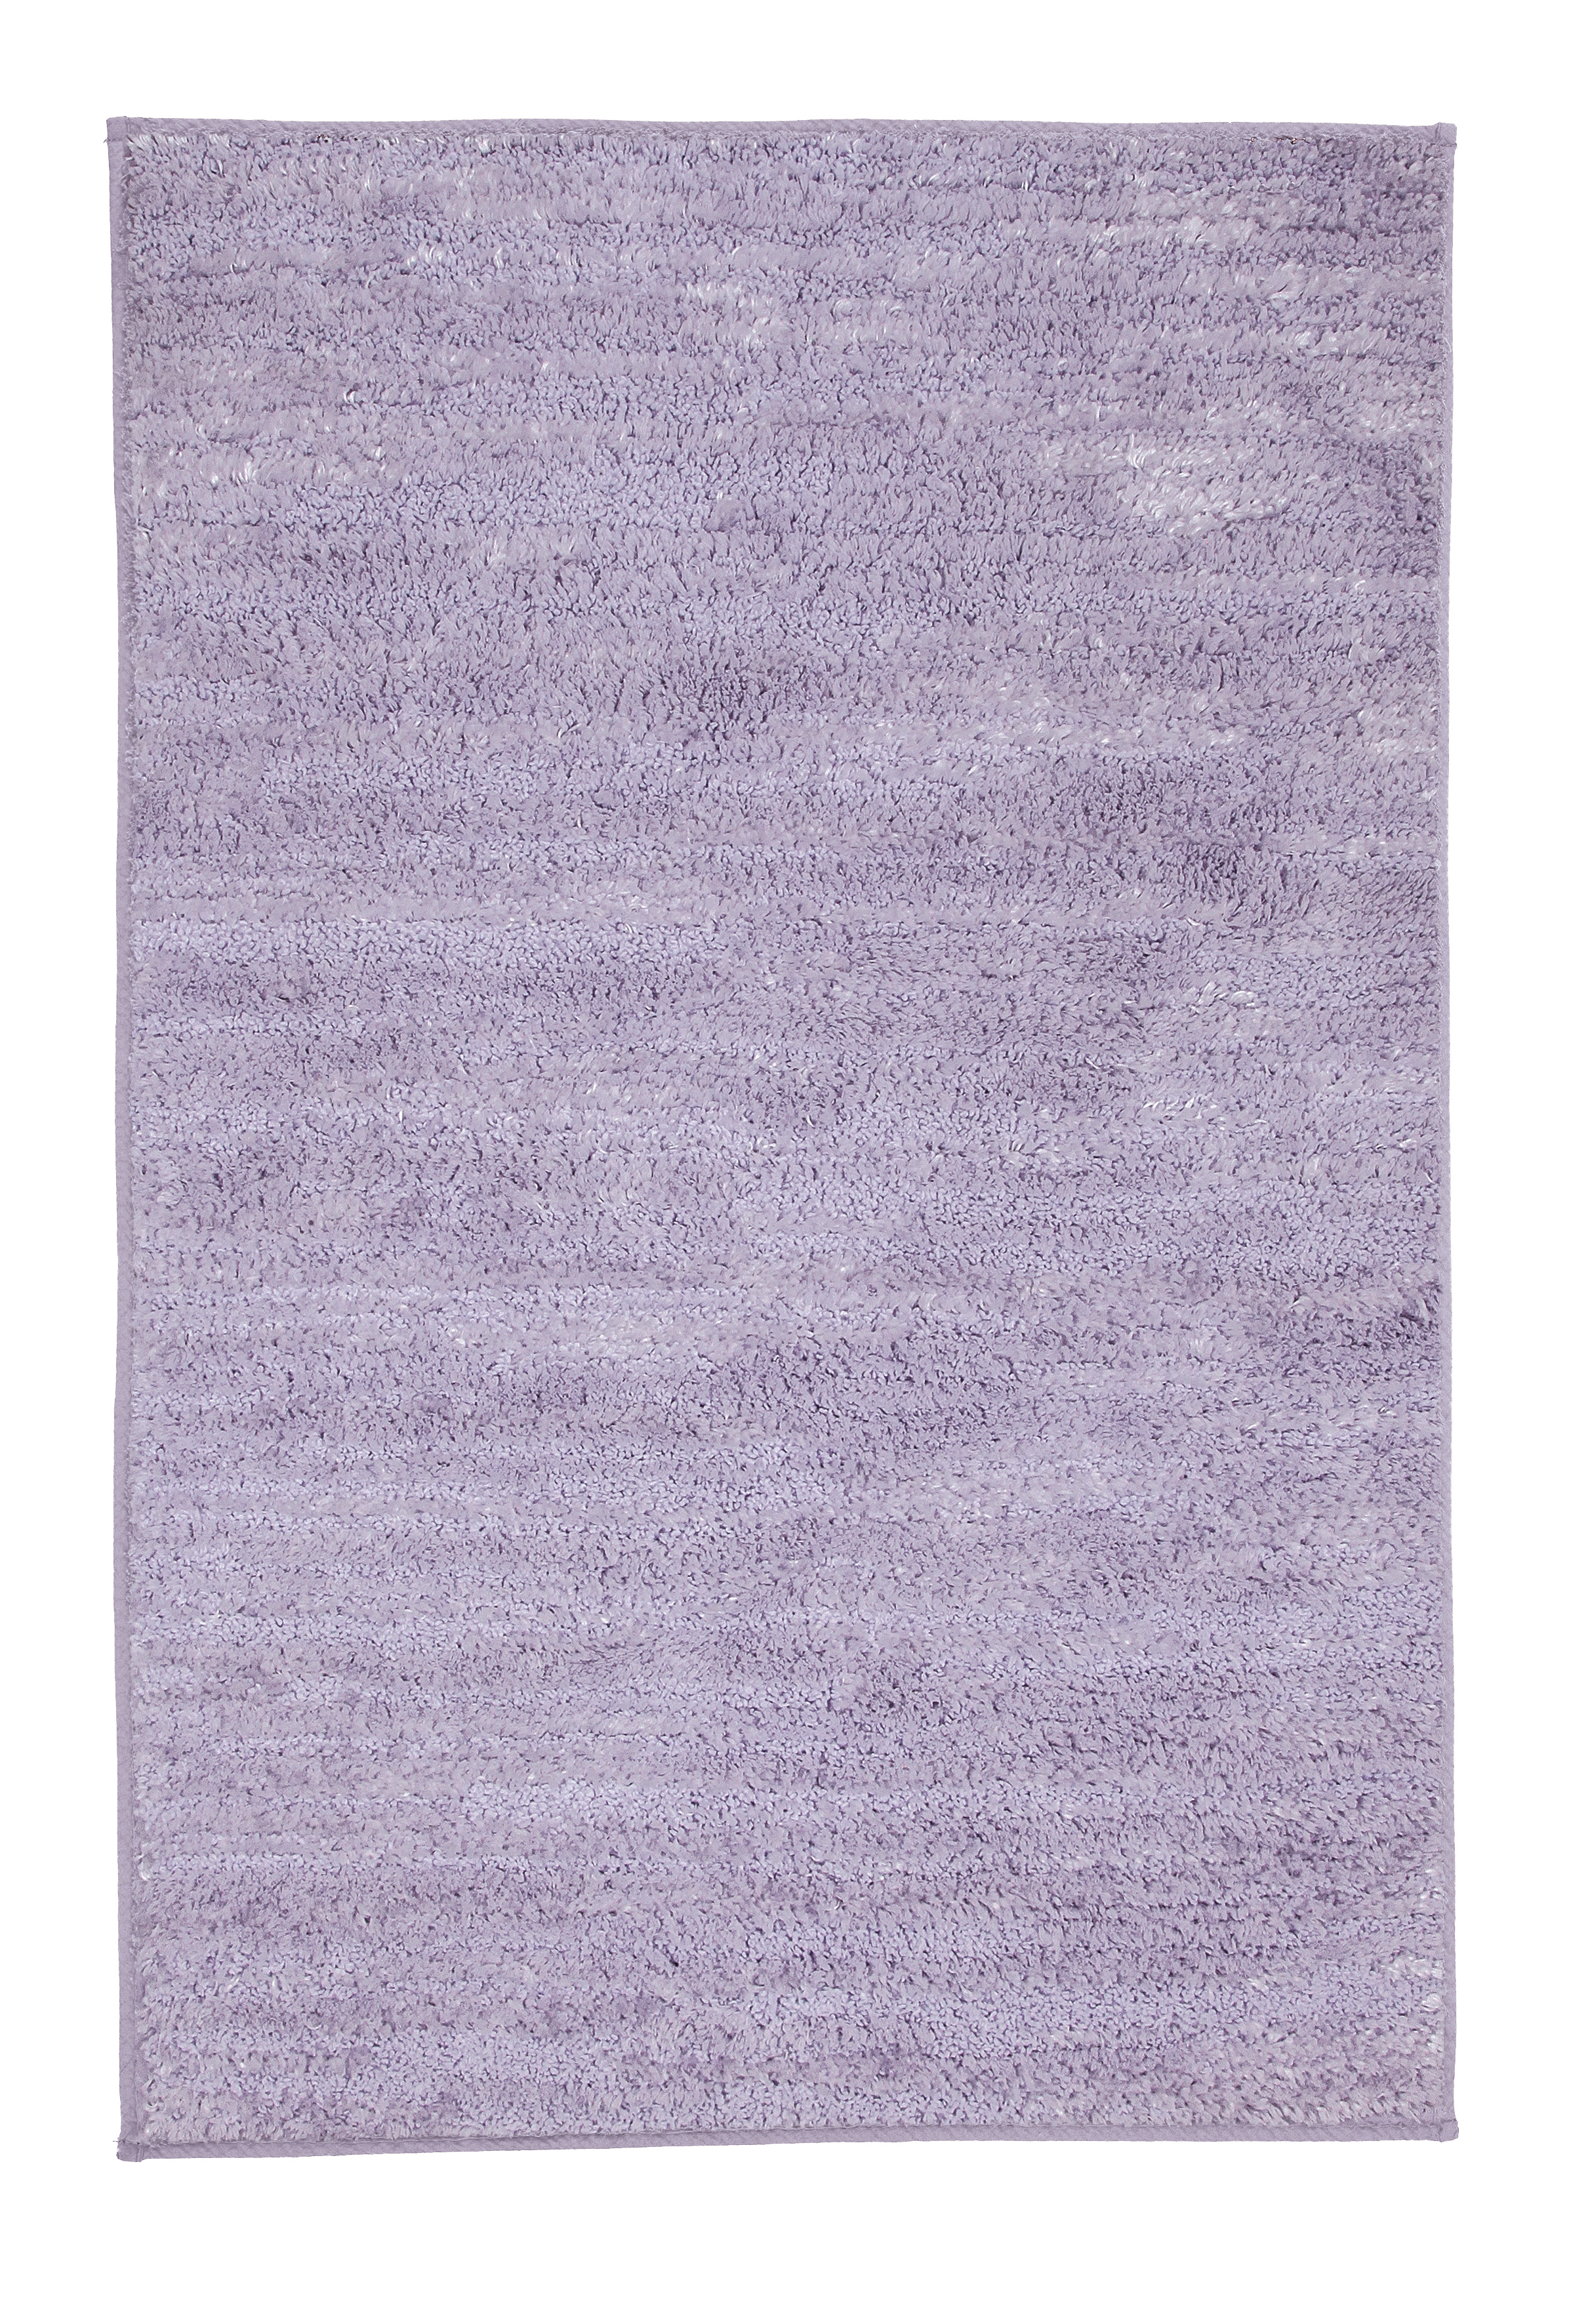 Badteppich, Glow Lavendel, 60x100 cm